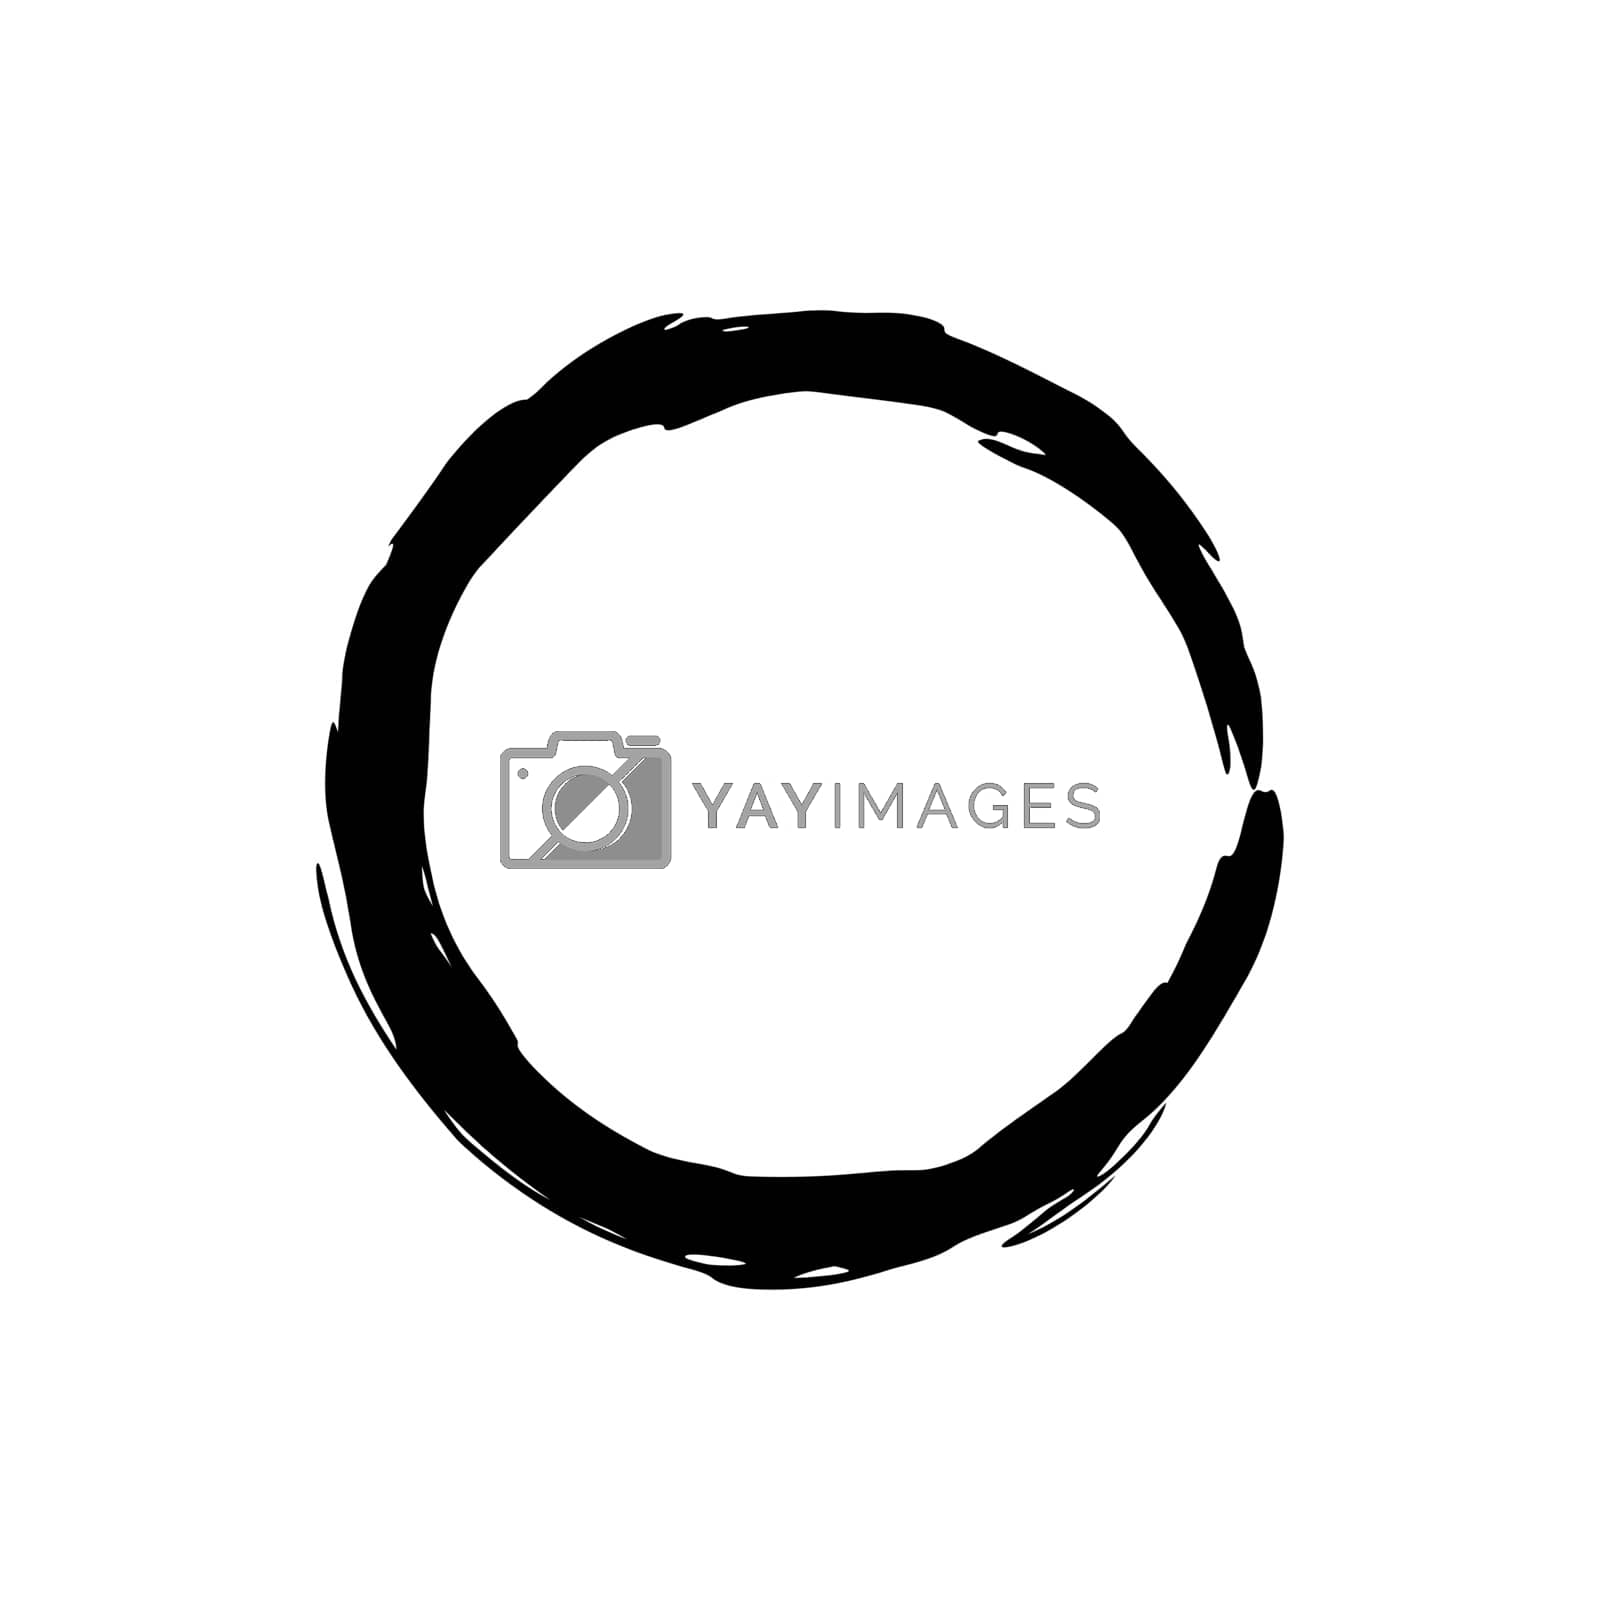 Royalty free image of Circle grunge ink spot vector background by olegkozyrev